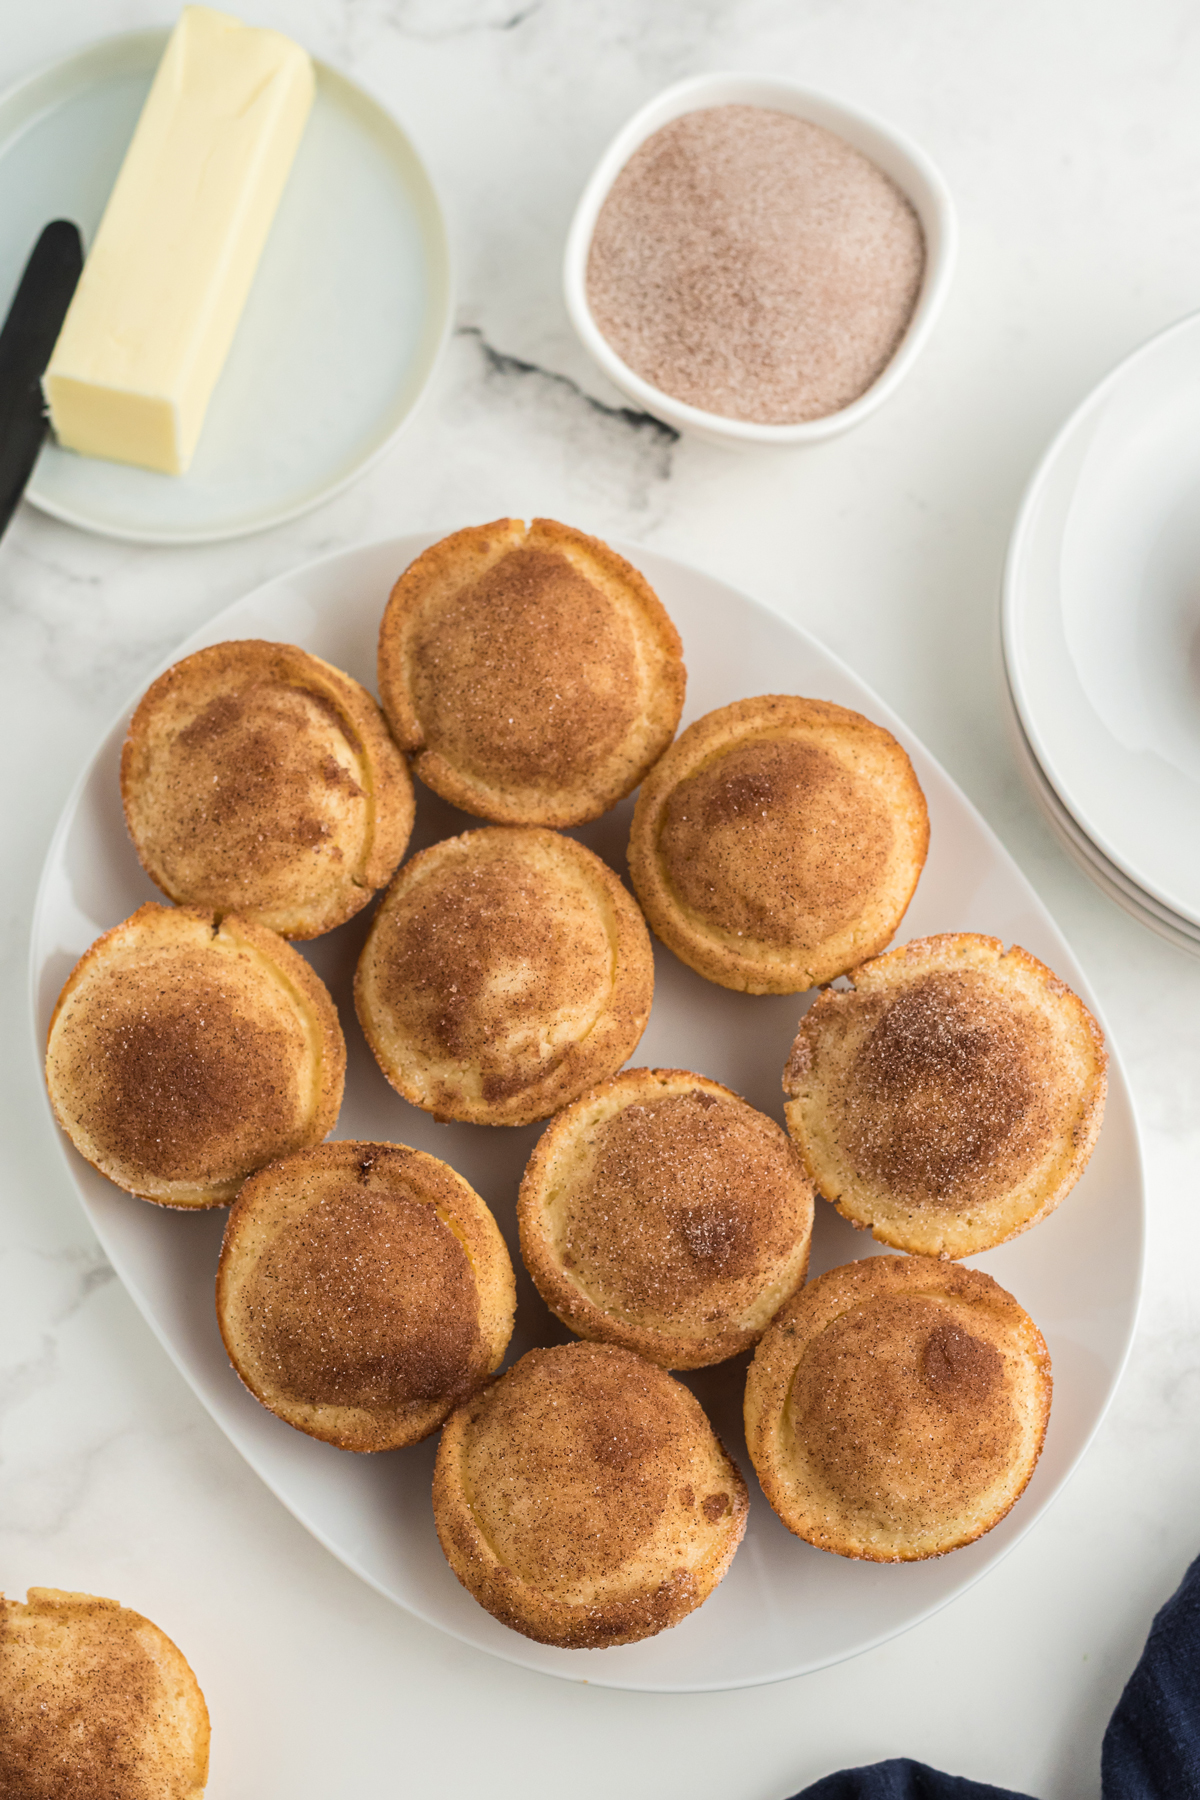 Cinnamon sugar muffins on a white plate